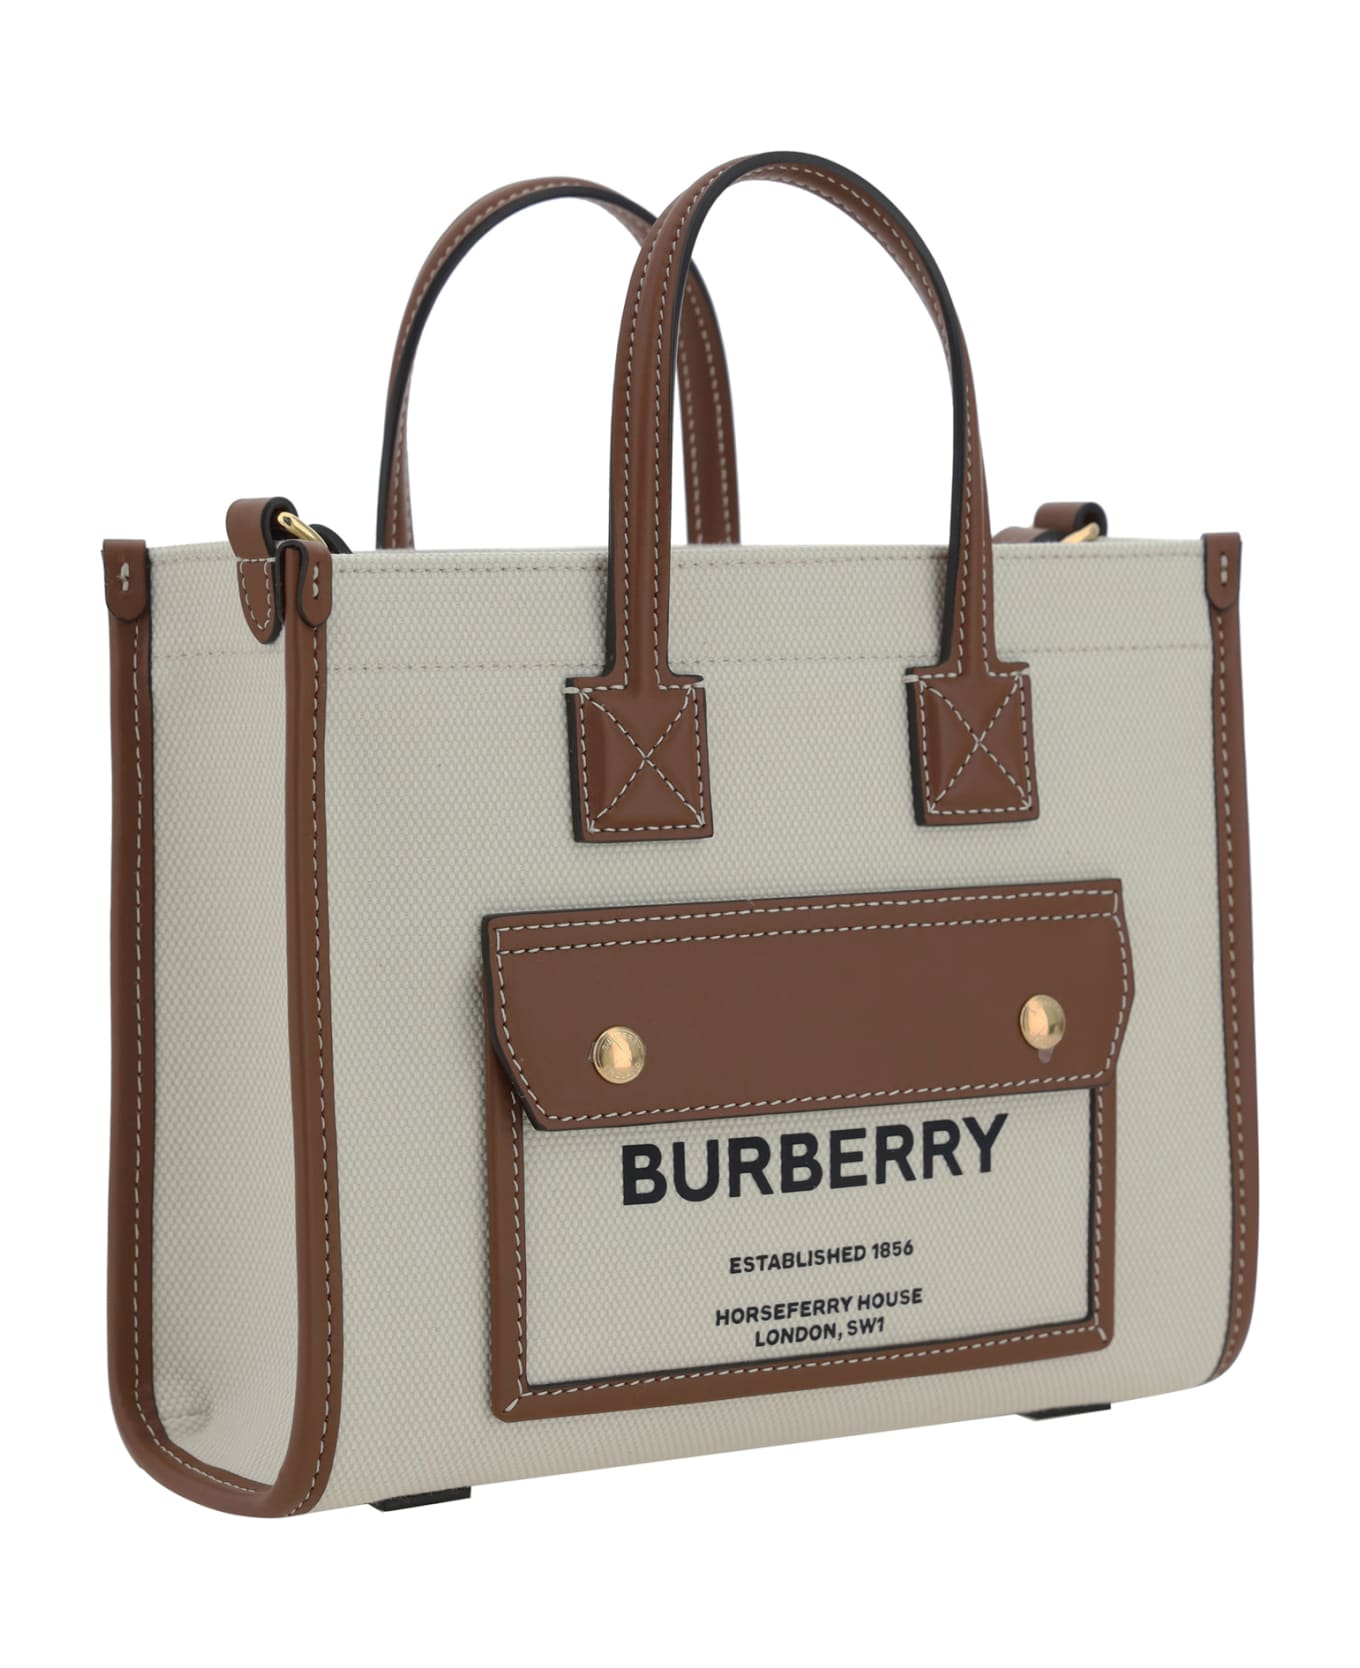 Burberry Feya Handbag - Natural/tan